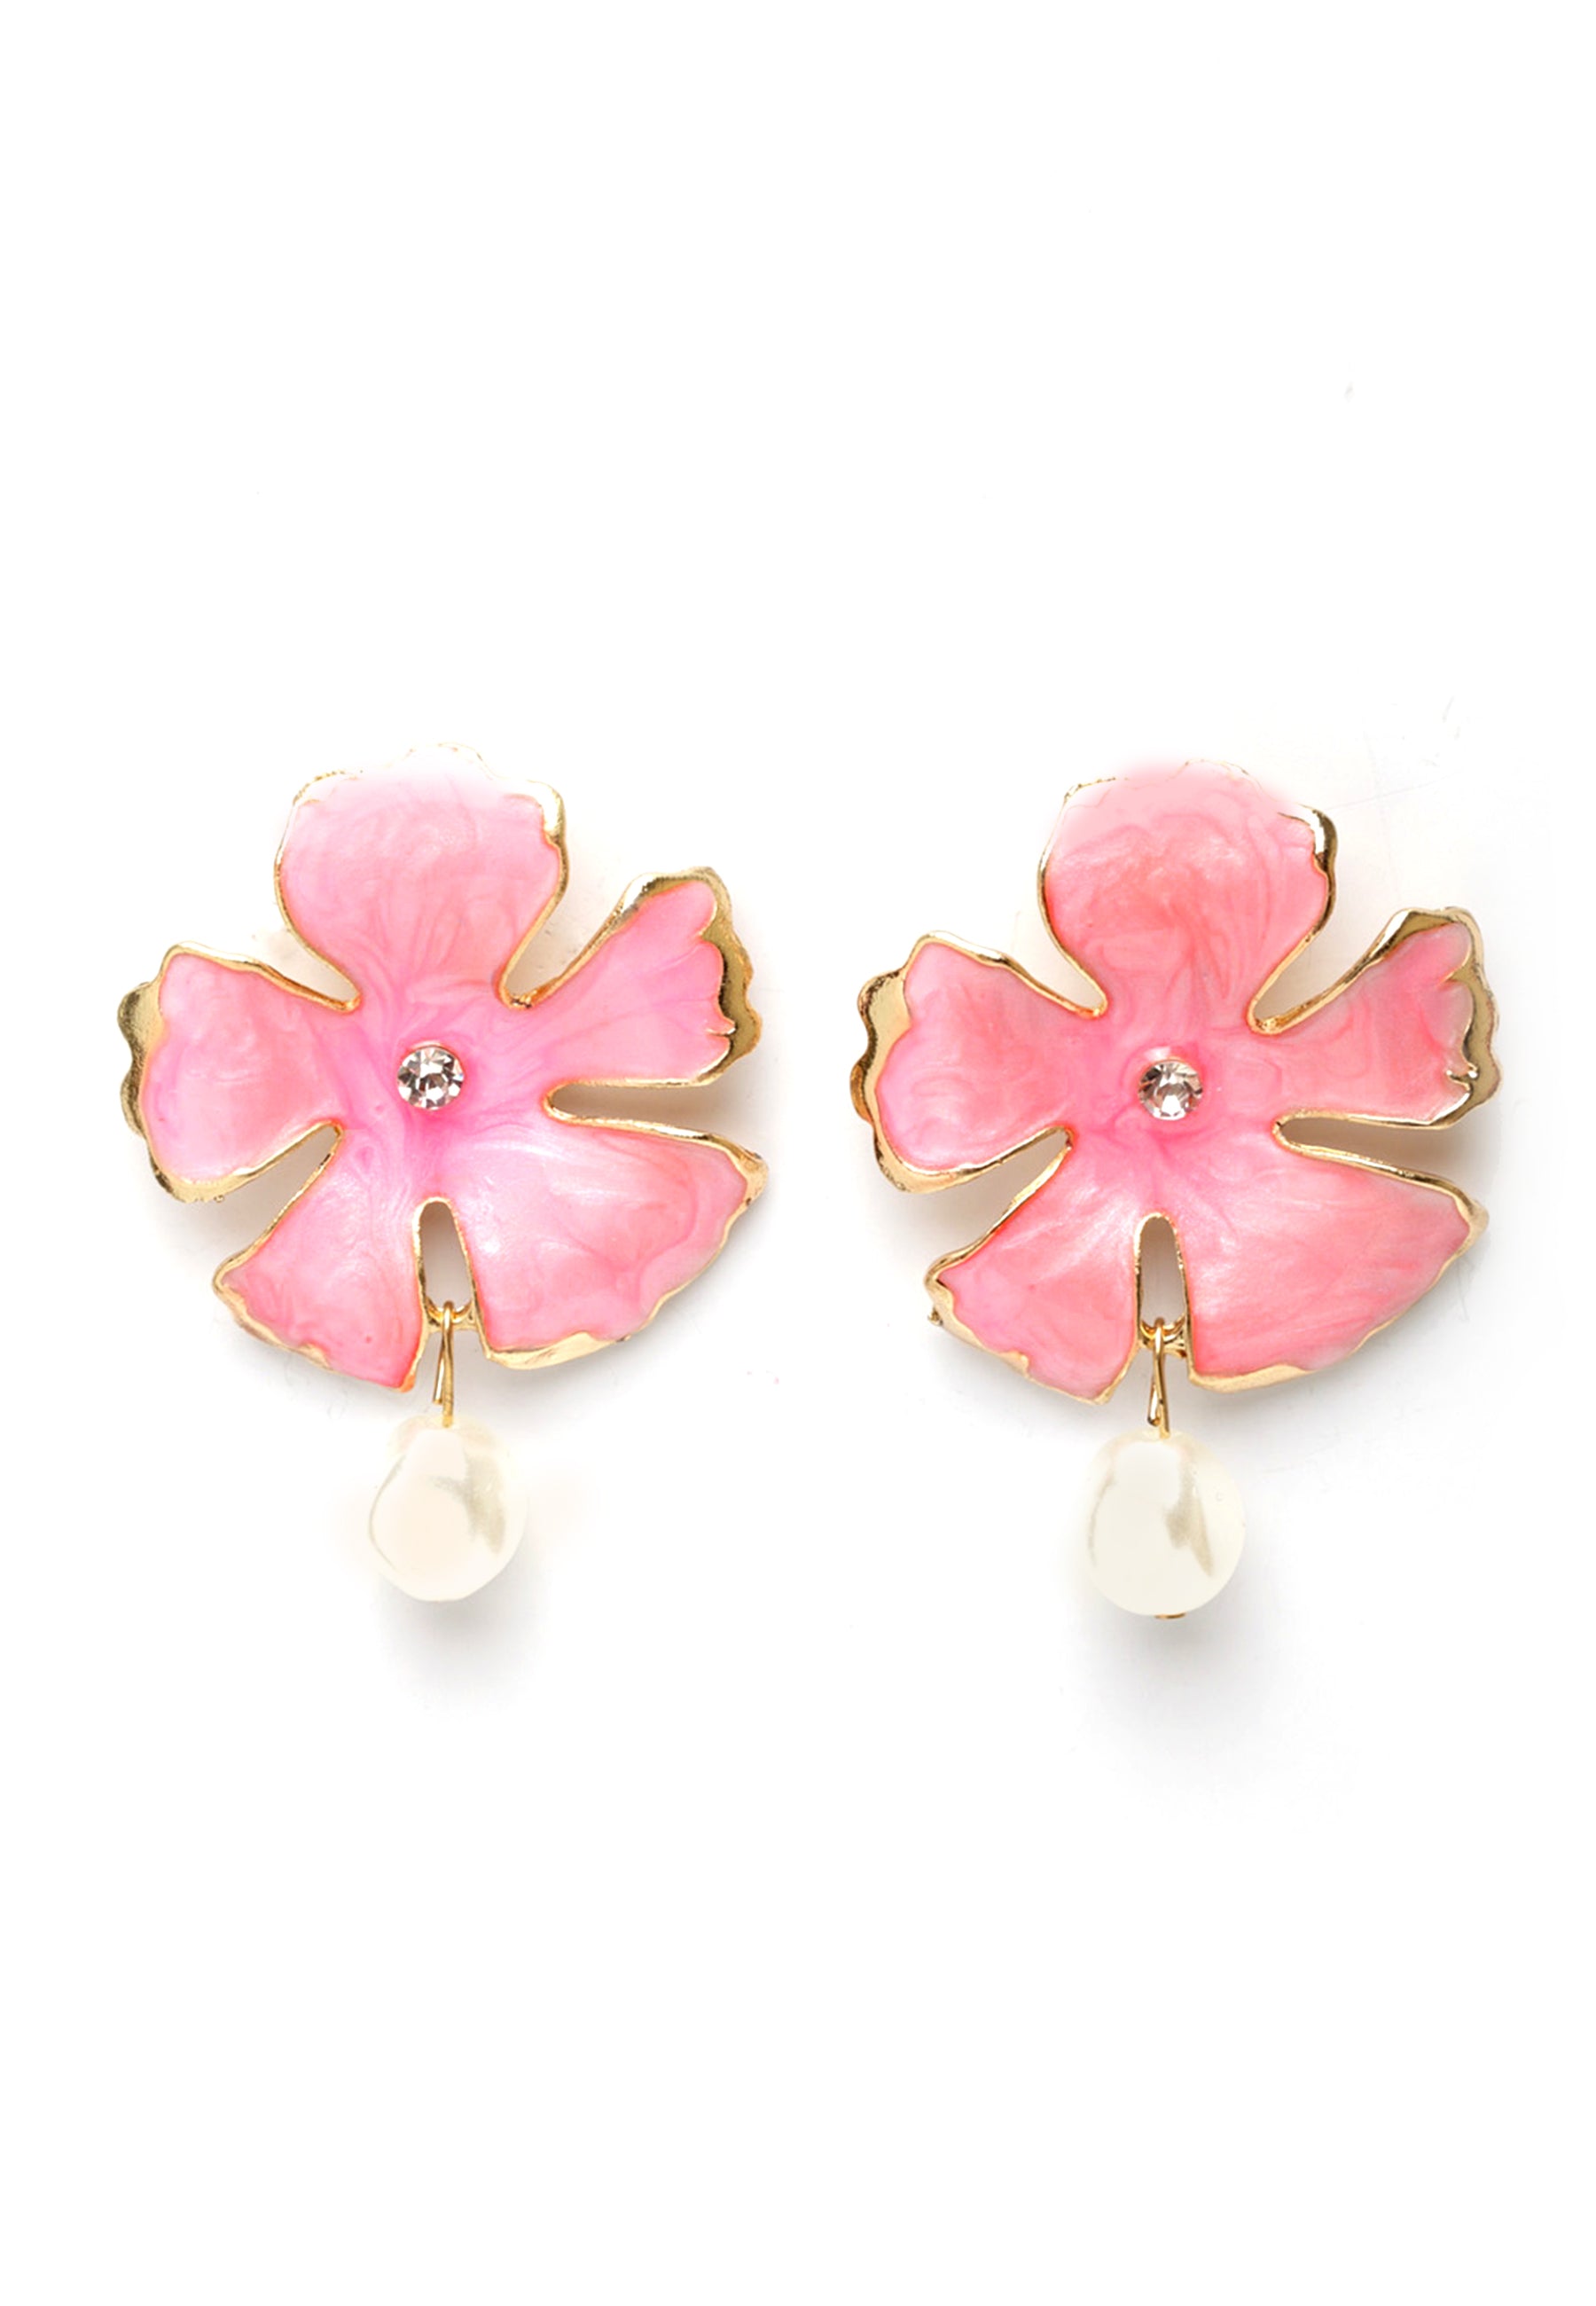 Avant-Garde Paris Statement Bohemian Summer Cute Pink Pearl Flower Stud Earrings